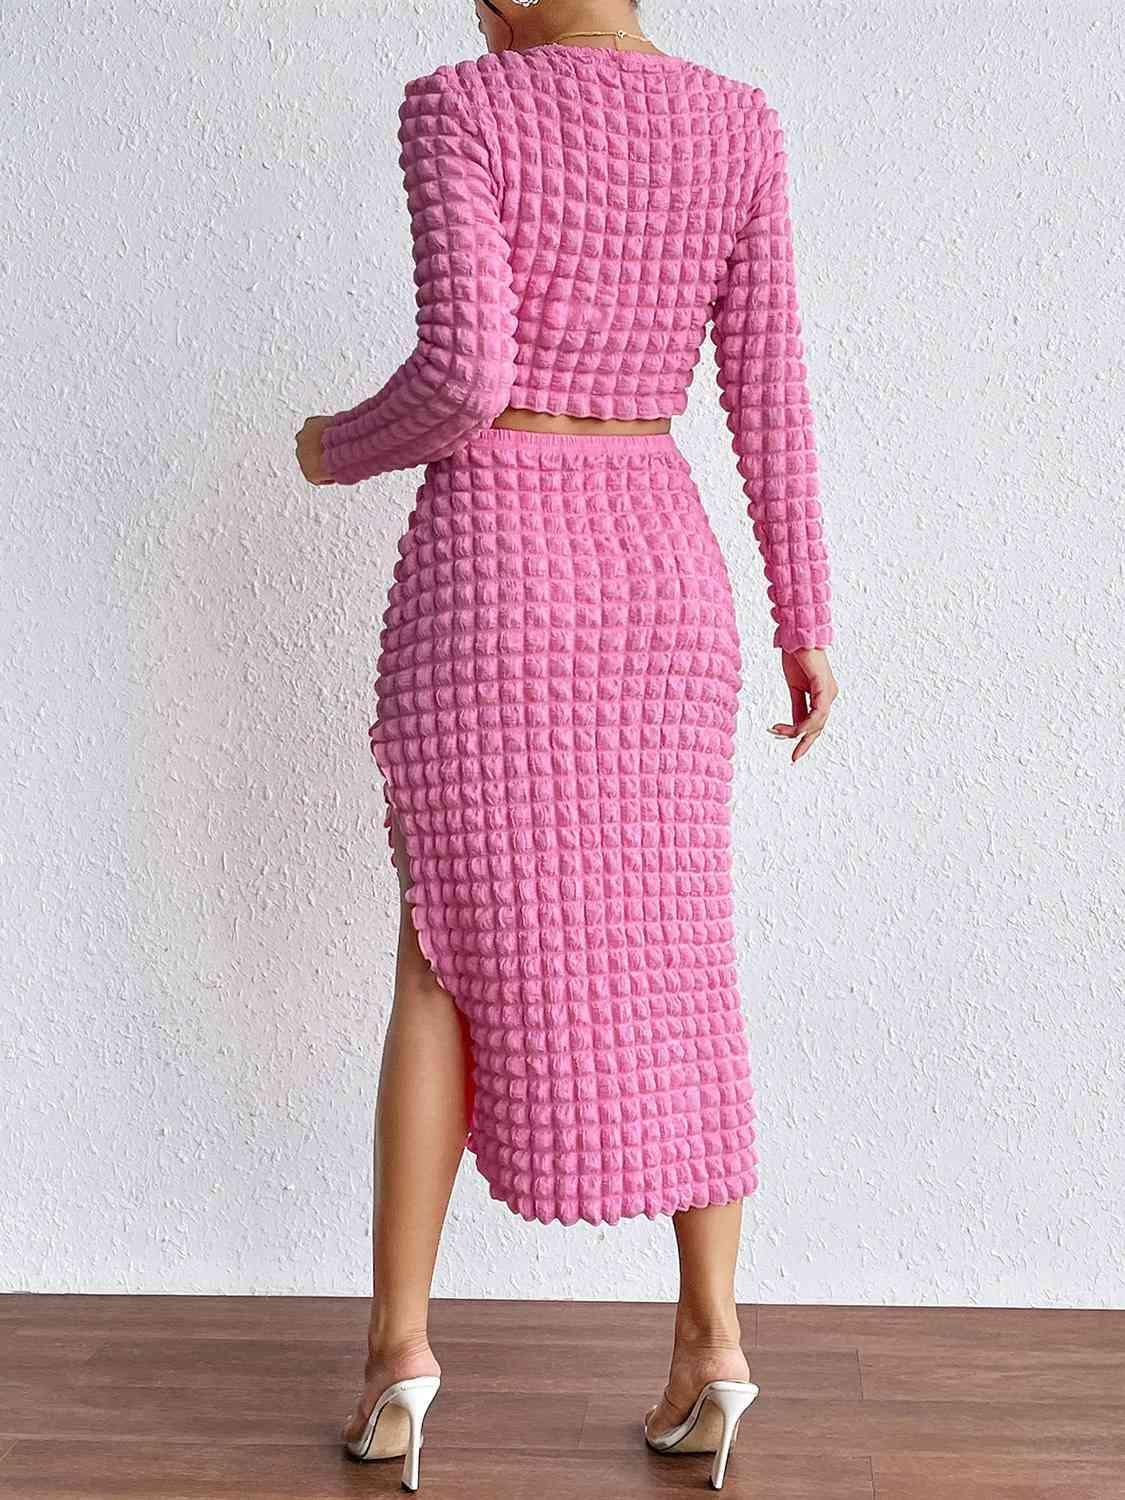 Barbie Elegance Long Sleeve Crop Top and Skirt Set - MXSTUDIO.COM